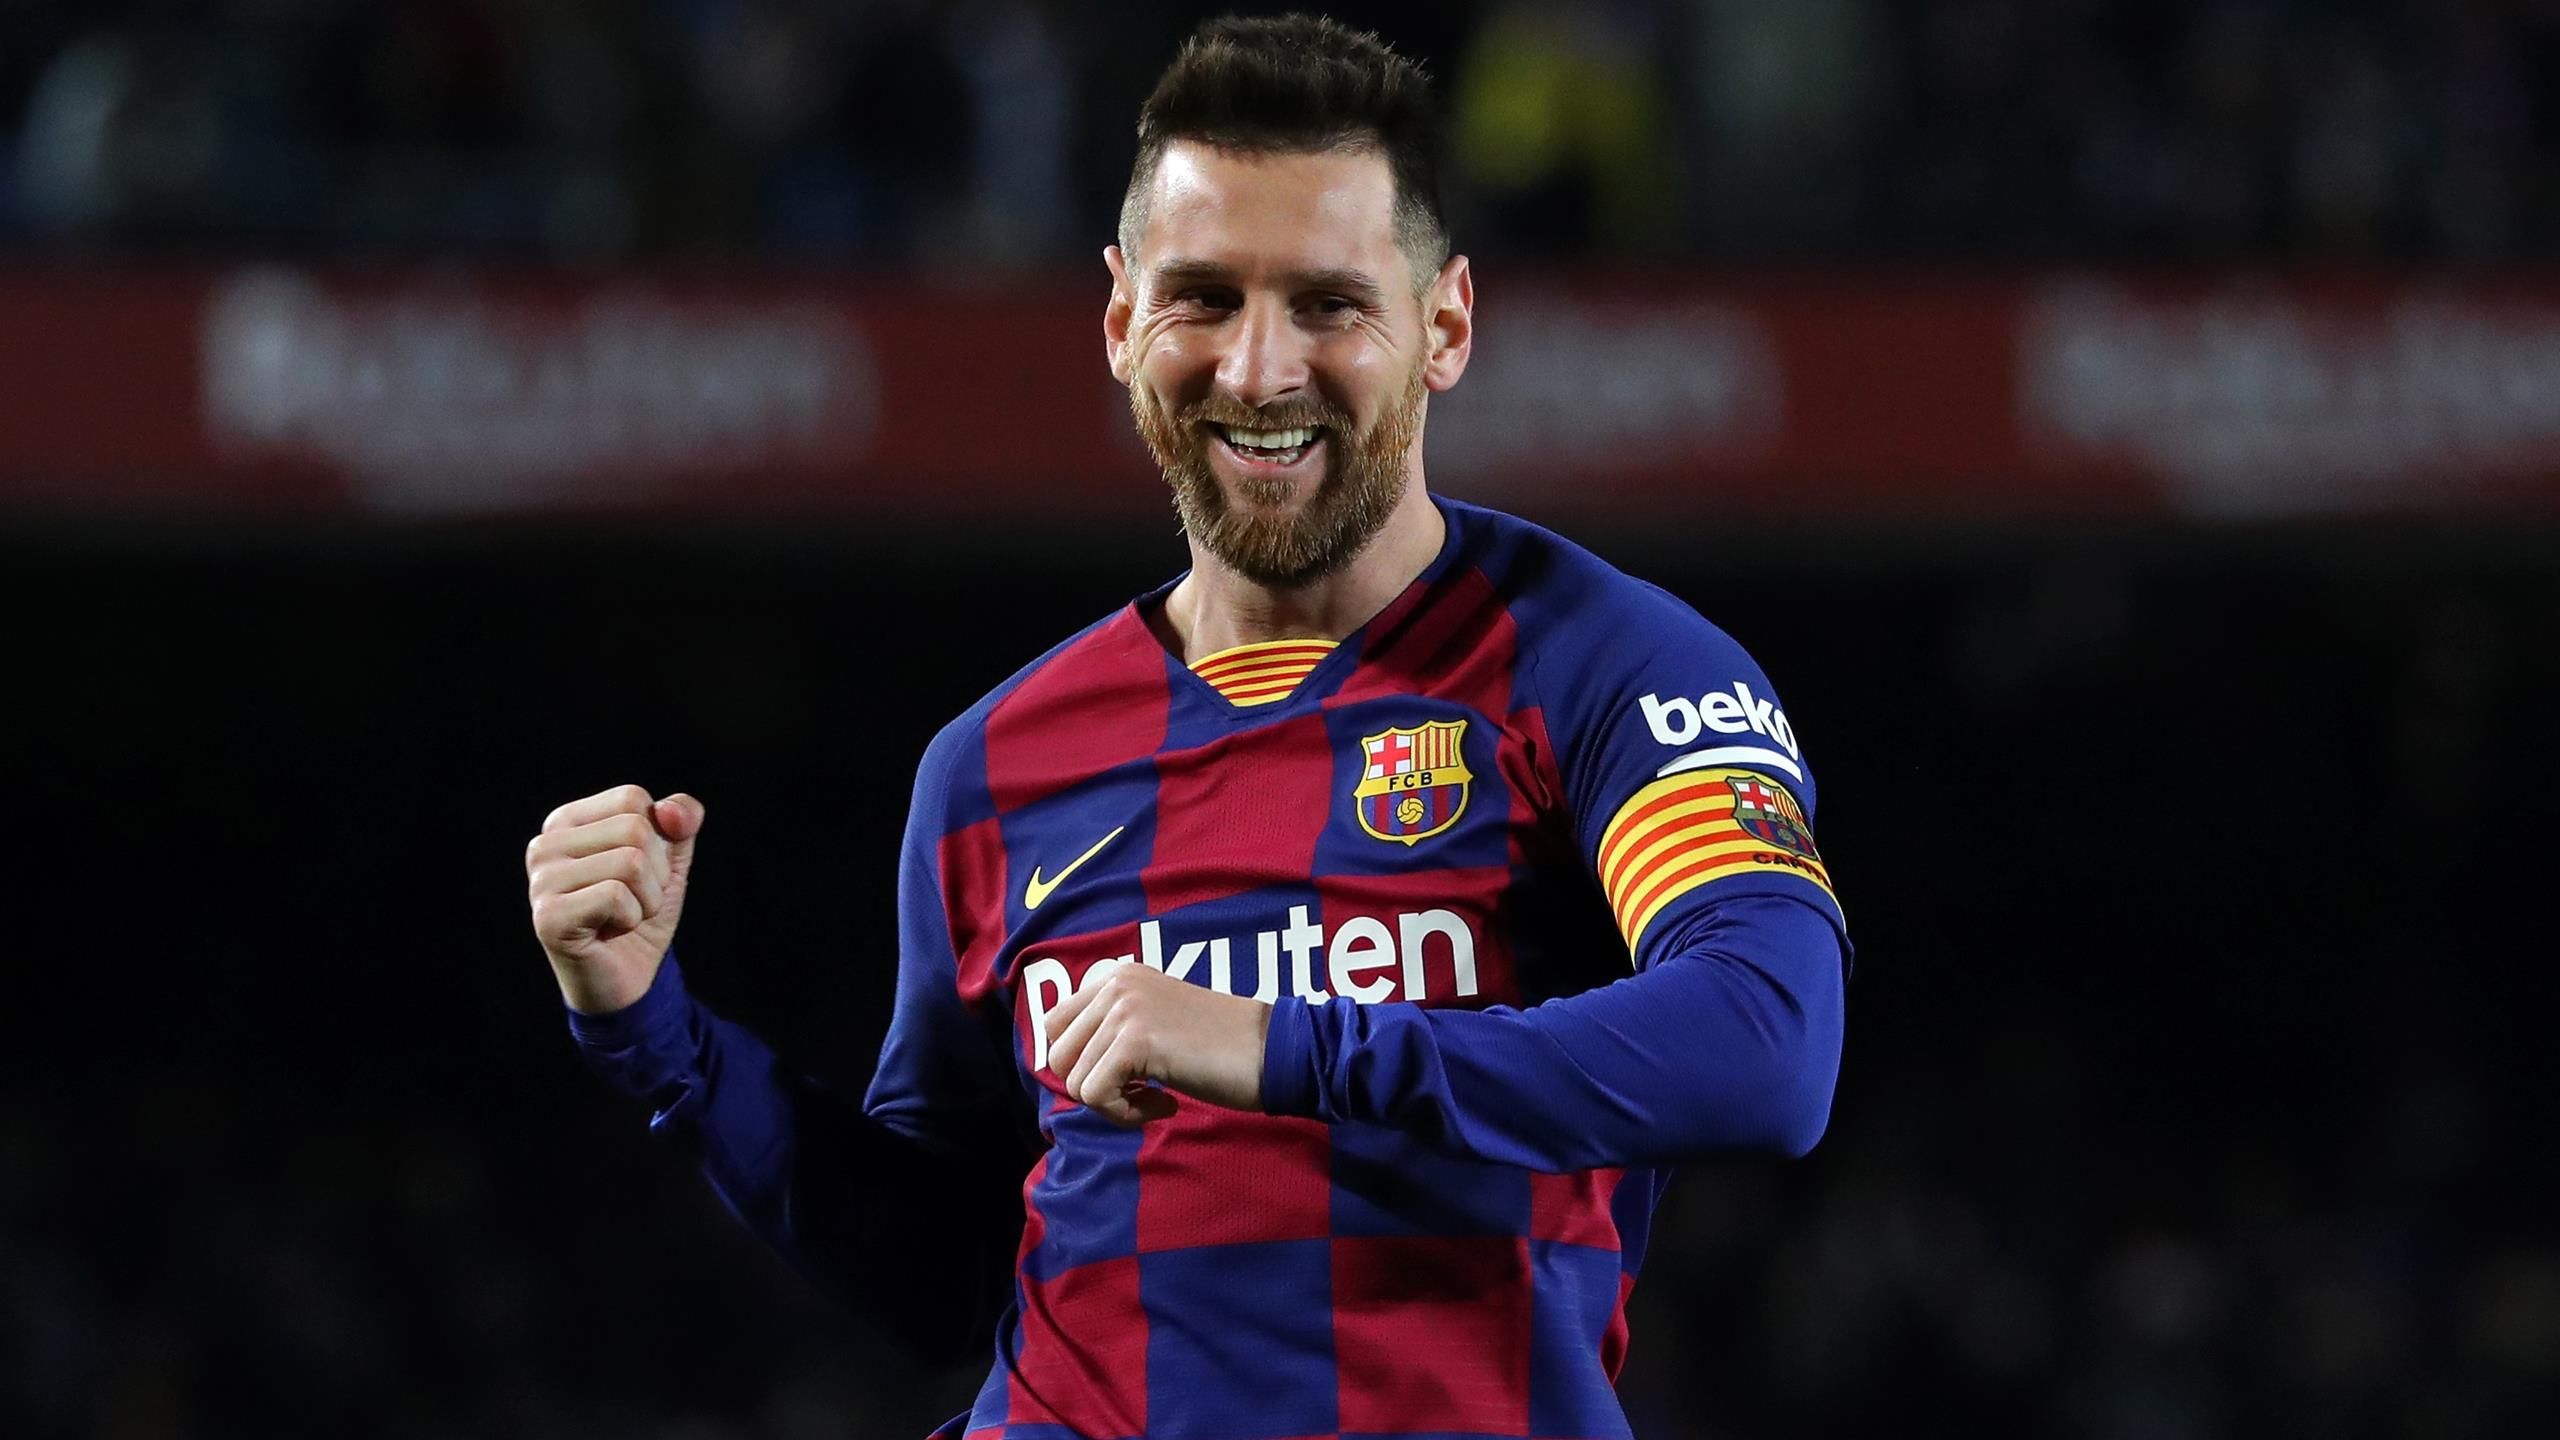 Barcelona Wants Messi Back But Lacks The Finance